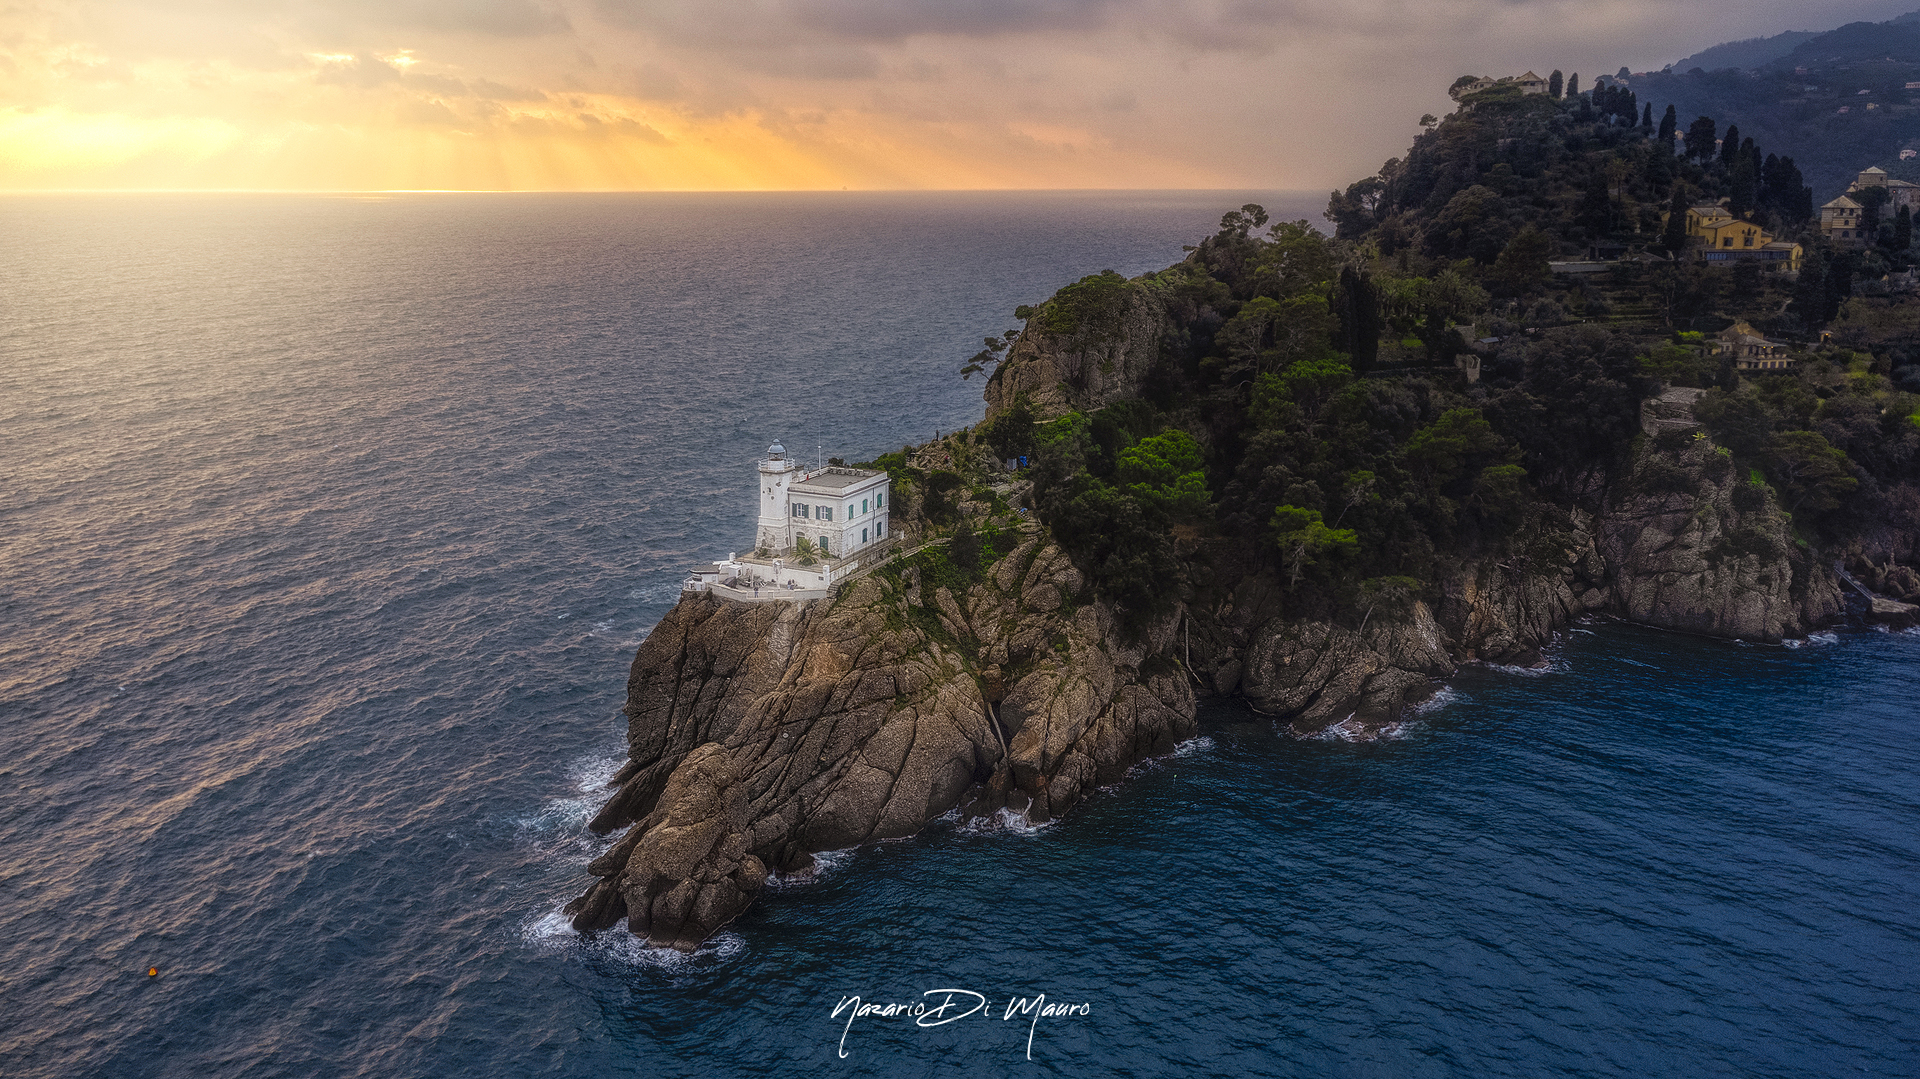 Magic sunset at the lighthouse of Portofino...